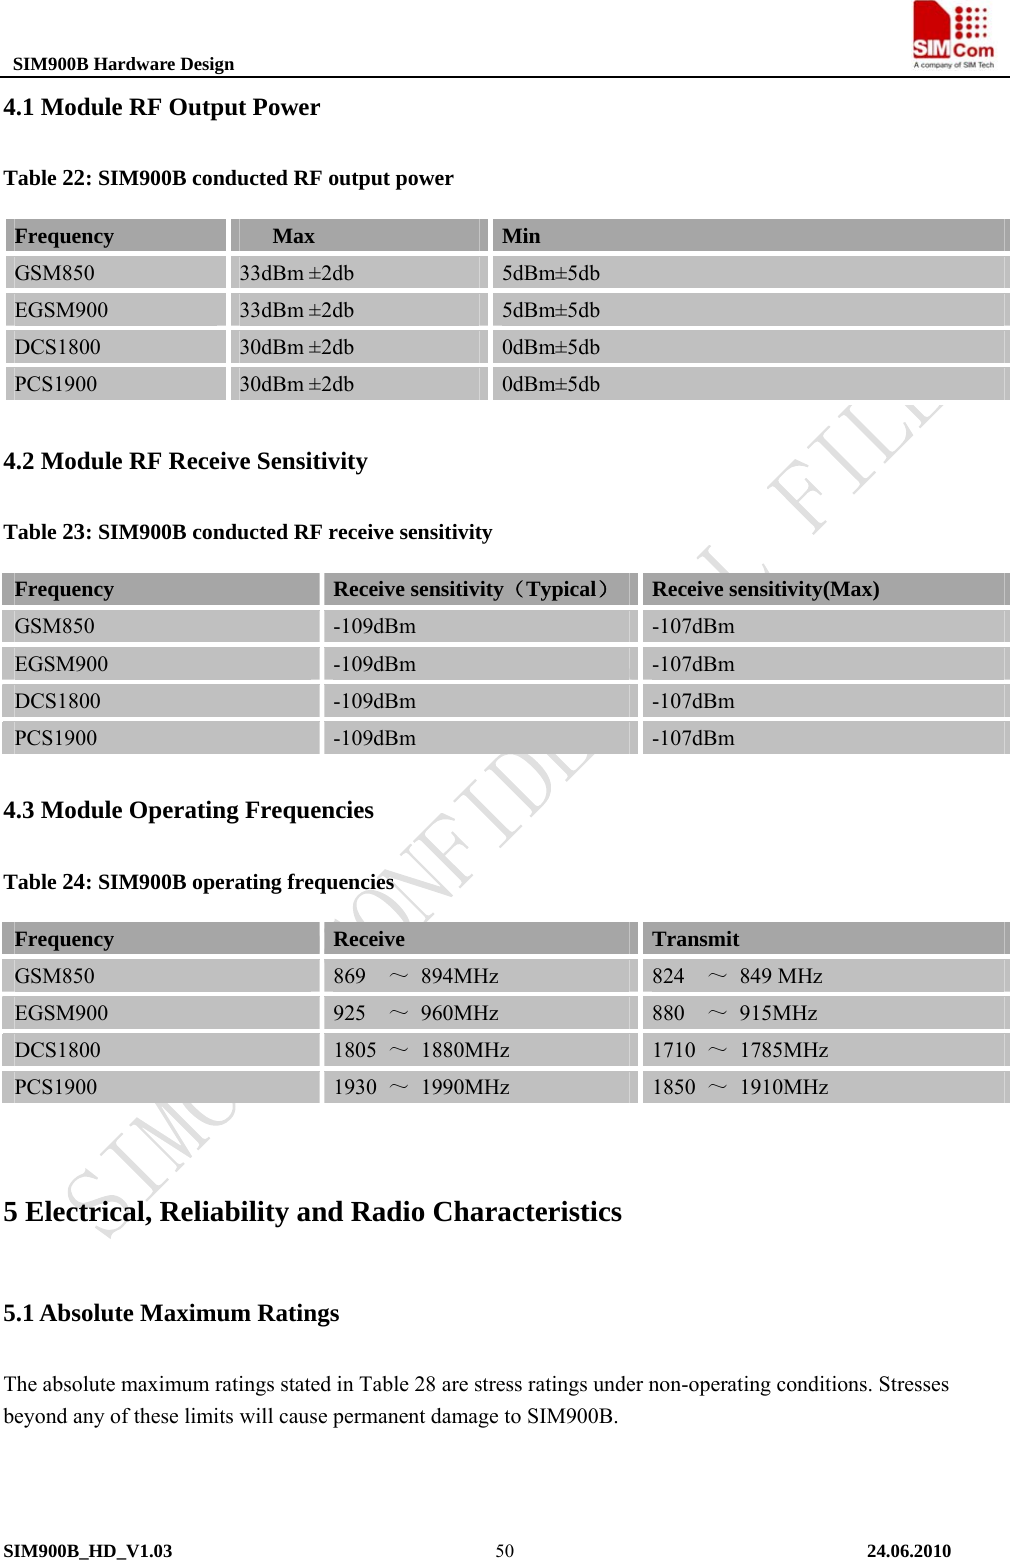  SIM900B Hardware Design                                                                          4.1 Module RF Output Power Table 22: SIM900B conducted RF output power Frequency      Max  Min GSM850  33dBm ±2db  5dBm±5db EGSM900  33dBm ±2db  5dBm±5db DCS1800  30dBm ±2db  0dBm±5db PCS1900  30dBm ±2db  0dBm±5db 4.2 Module RF Receive Sensitivity Table 23: SIM900B conducted RF receive sensitivity Frequency   Receive sensitivity（Typical） Receive sensitivity(Max) GSM850  -109dBm  -107dBm EGSM900  -109dBm  -107dBm DCS1800  -109dBm  -107dBm PCS1900  -109dBm  -107dBm 4.3 Module Operating Frequencies Table 24: SIM900B operating frequencies Frequency   Receive   Transmit  GSM850  869  ～ 894MHz  824  ～ 849 MHz EGSM900  925  ～ 960MHz  880  ～ 915MHz DCS1800  1805  ～ 1880MHz  1710  ～ 1785MHz PCS1900  1930  ～ 1990MHz  1850  ～ 1910MHz  5 Electrical, Reliability and Radio Characteristics 5.1 Absolute Maximum Ratings The absolute maximum ratings stated in Table 28 are stress ratings under non-operating conditions. Stresses beyond any of these limits will cause permanent damage to SIM900B.  SIM900B_HD_V1.03                                                                          24.06.2010  50